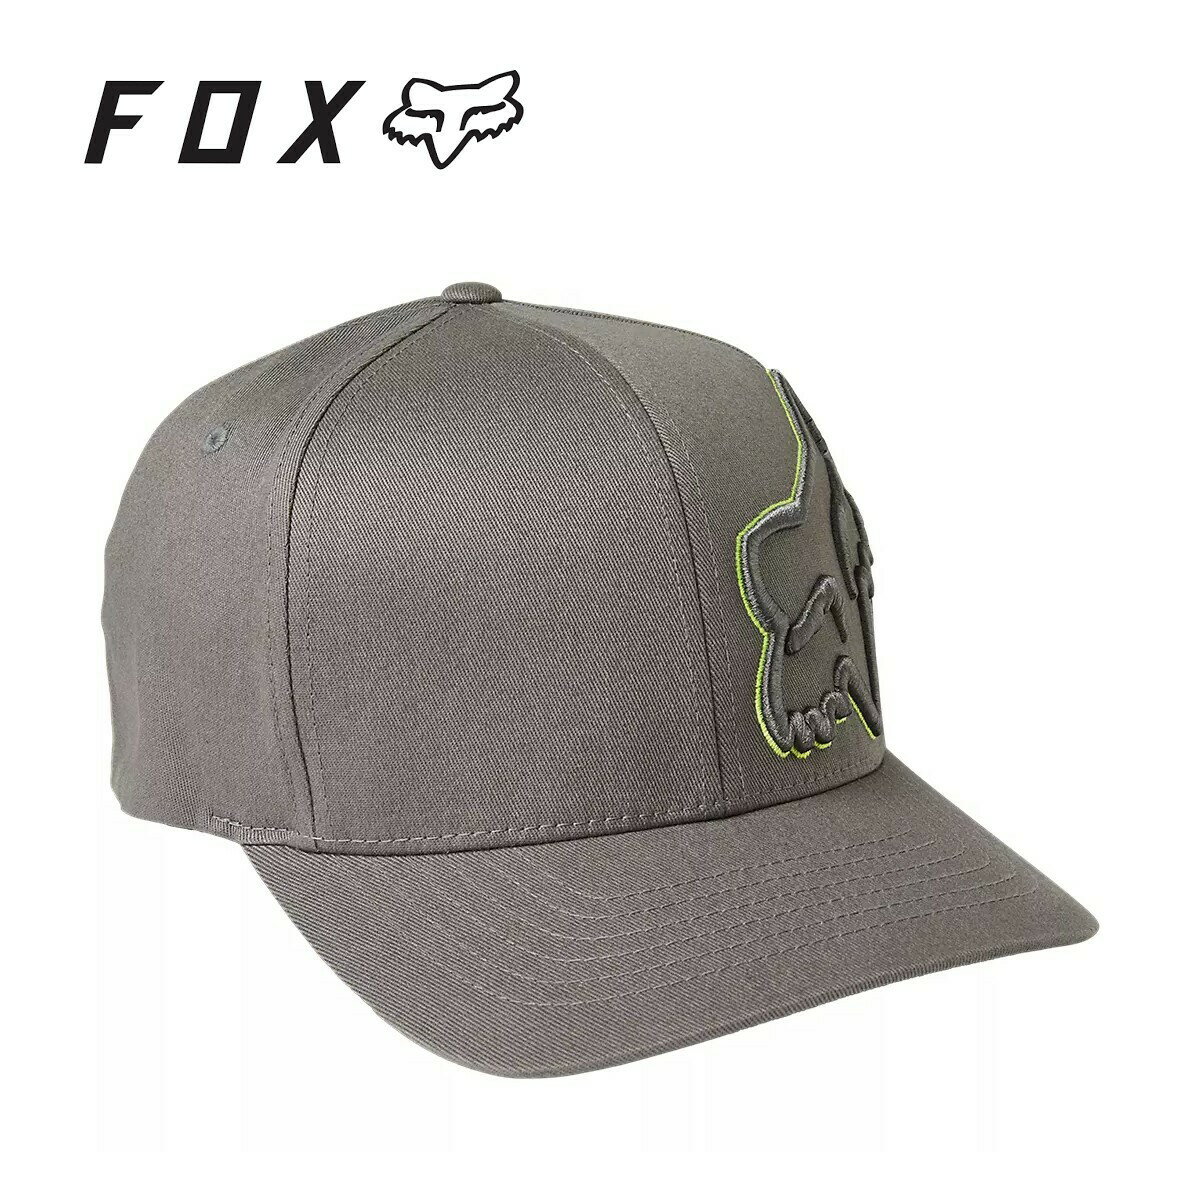 FOX RACING フォックスレーシング エピスコープ フレックスフィット ハット グレー/イエロー EPISCOPE FLEXFIT HAT Grey/Yellow